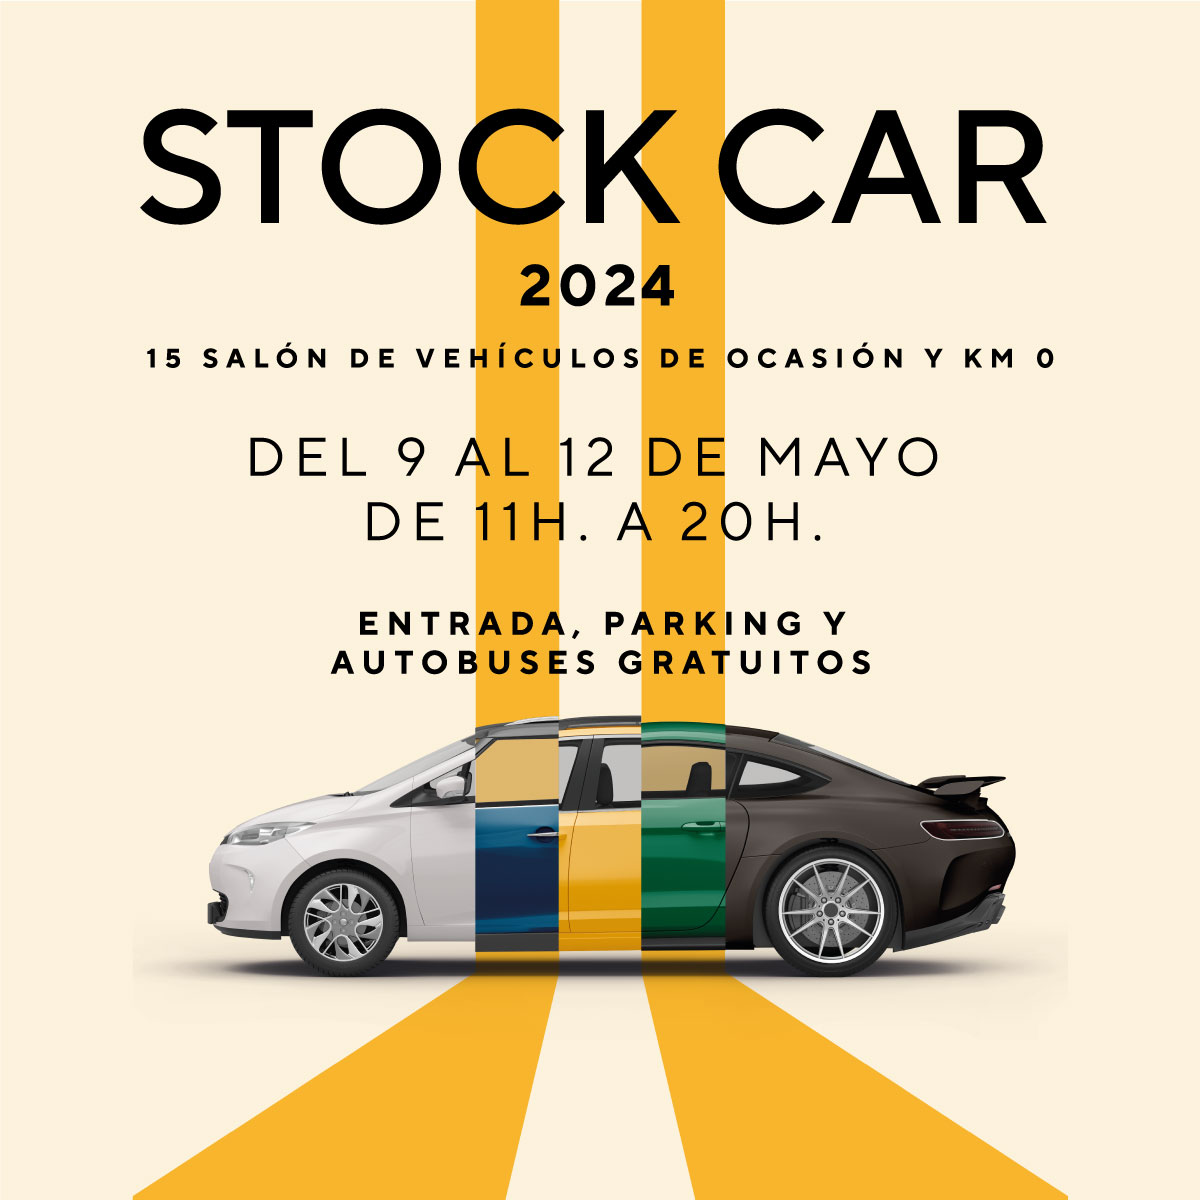 STOCK-CAR 2024